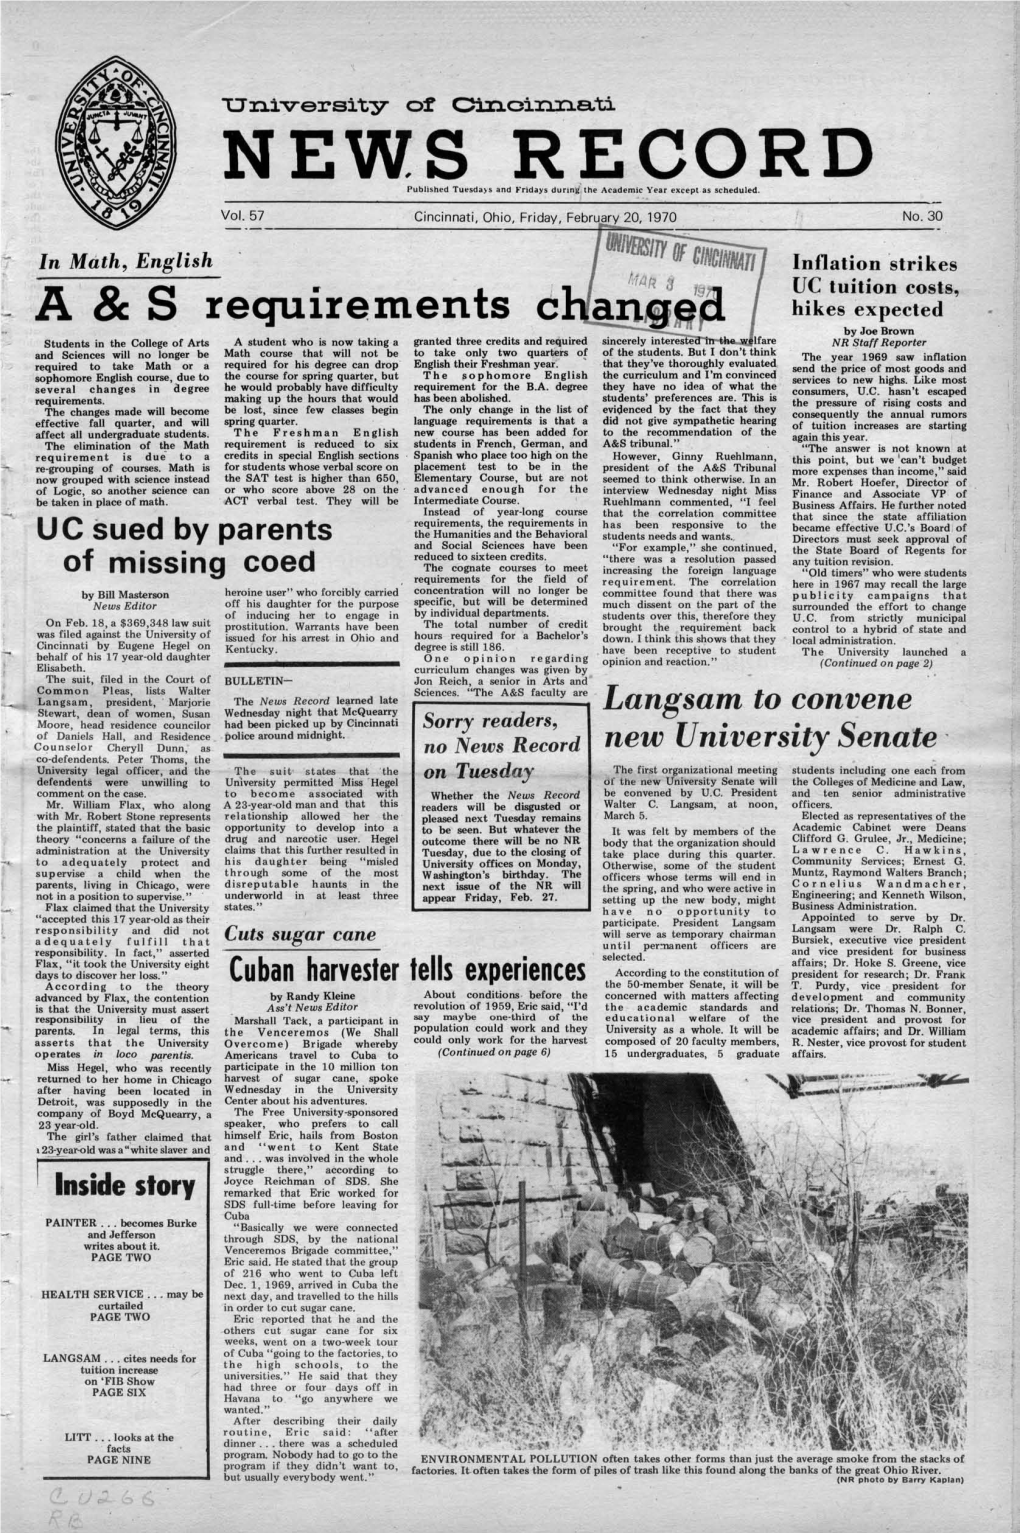 University of Cincinnati News Record. Friday, February 20, 1970. Vol. LVII